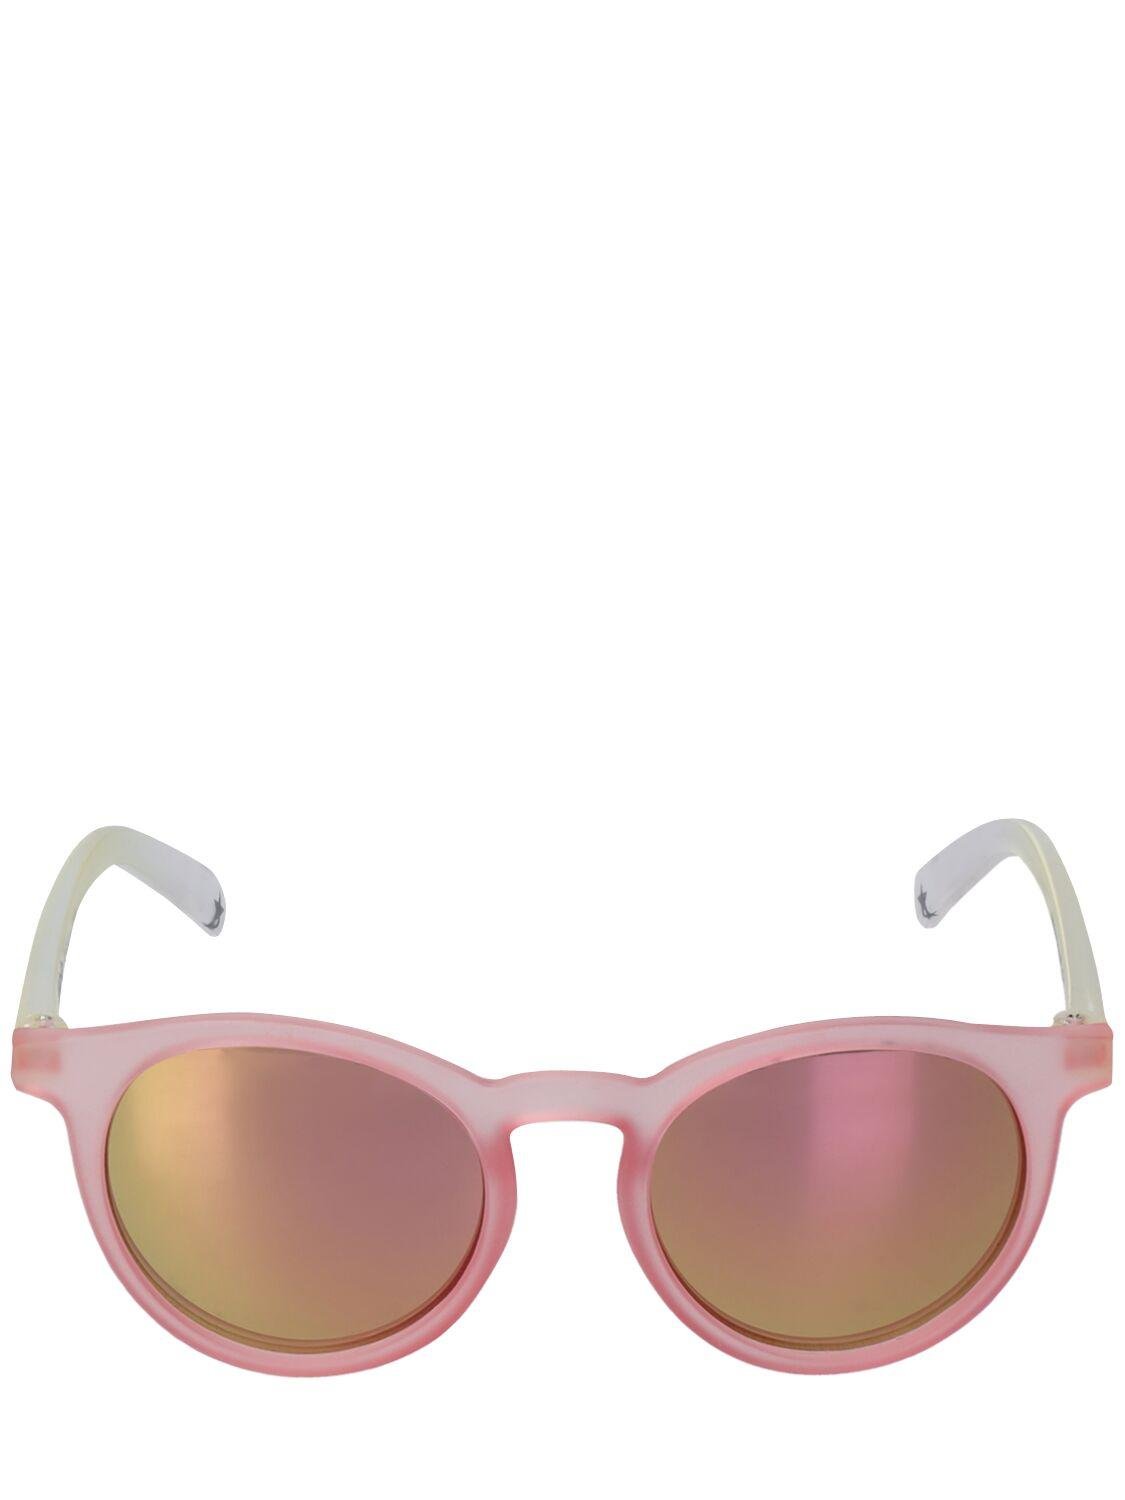 Round Polycarbonate Sunglasses by MOLO